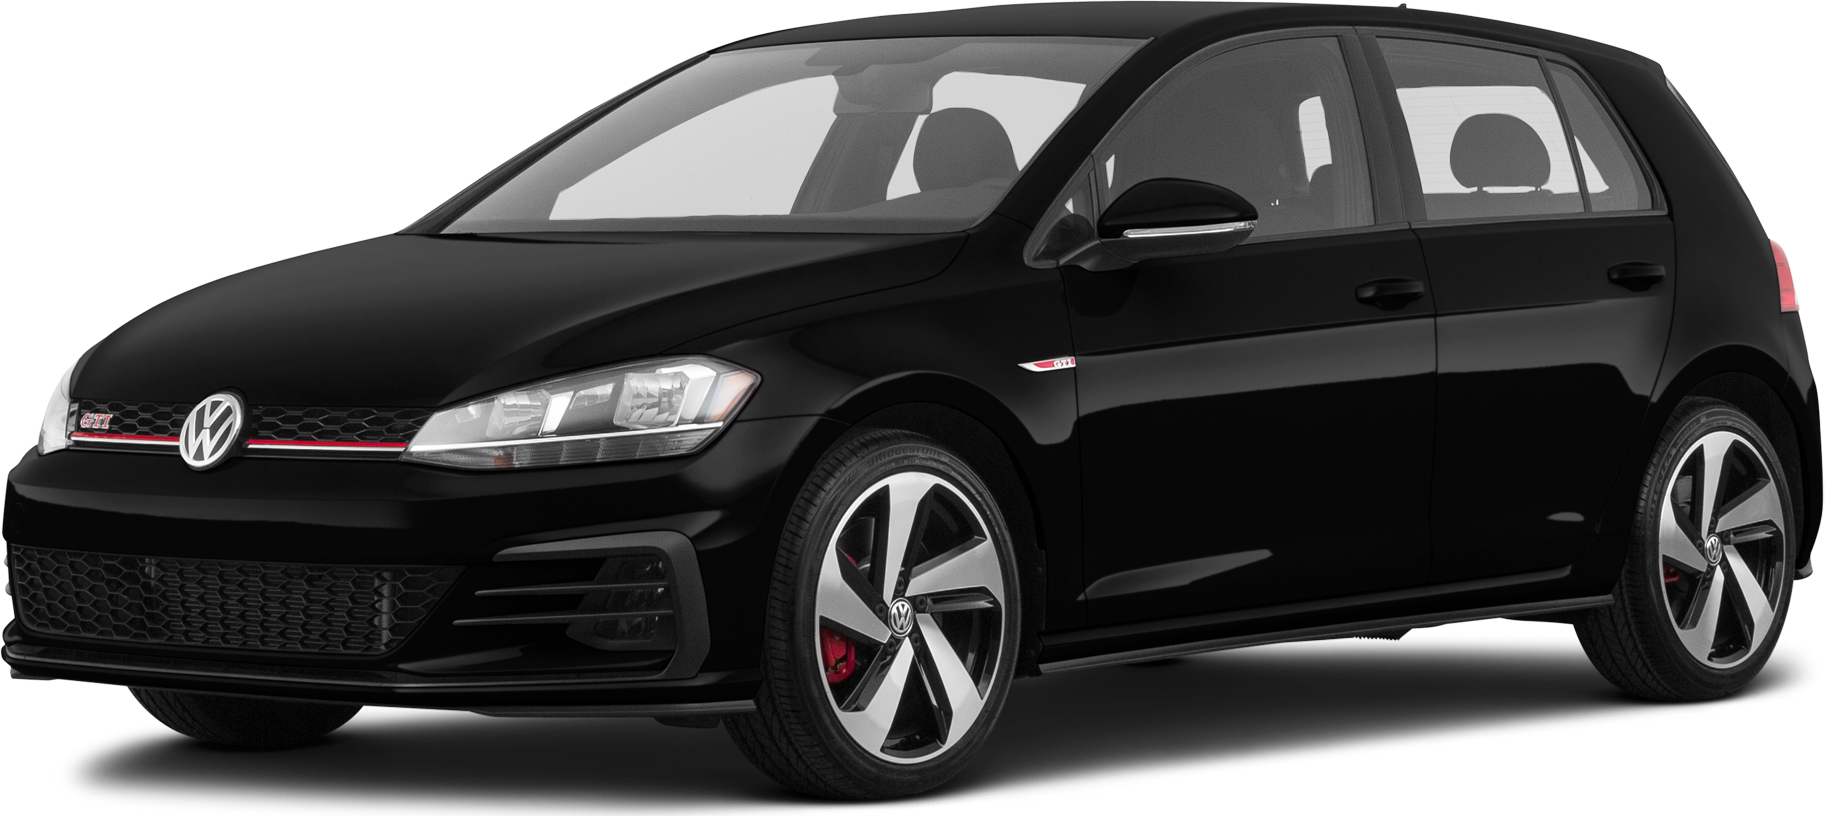 2021 Volkswagen Golf Review & Ratings